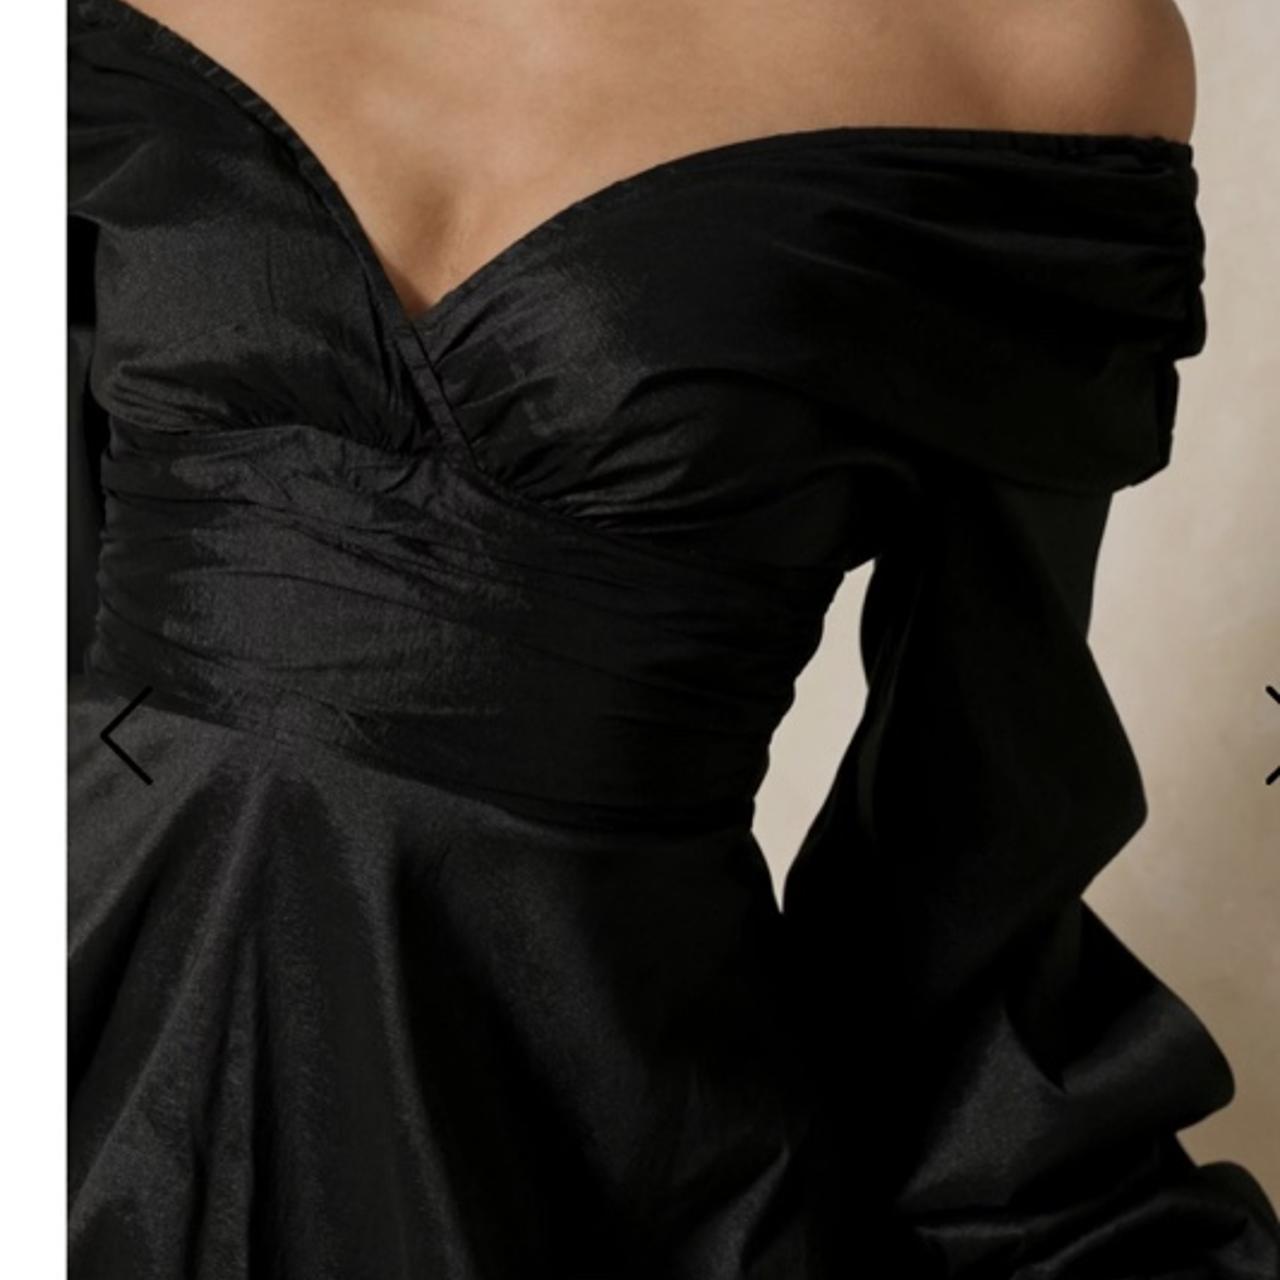 Product Image 4 - Black MISSPAP dress! Worn one